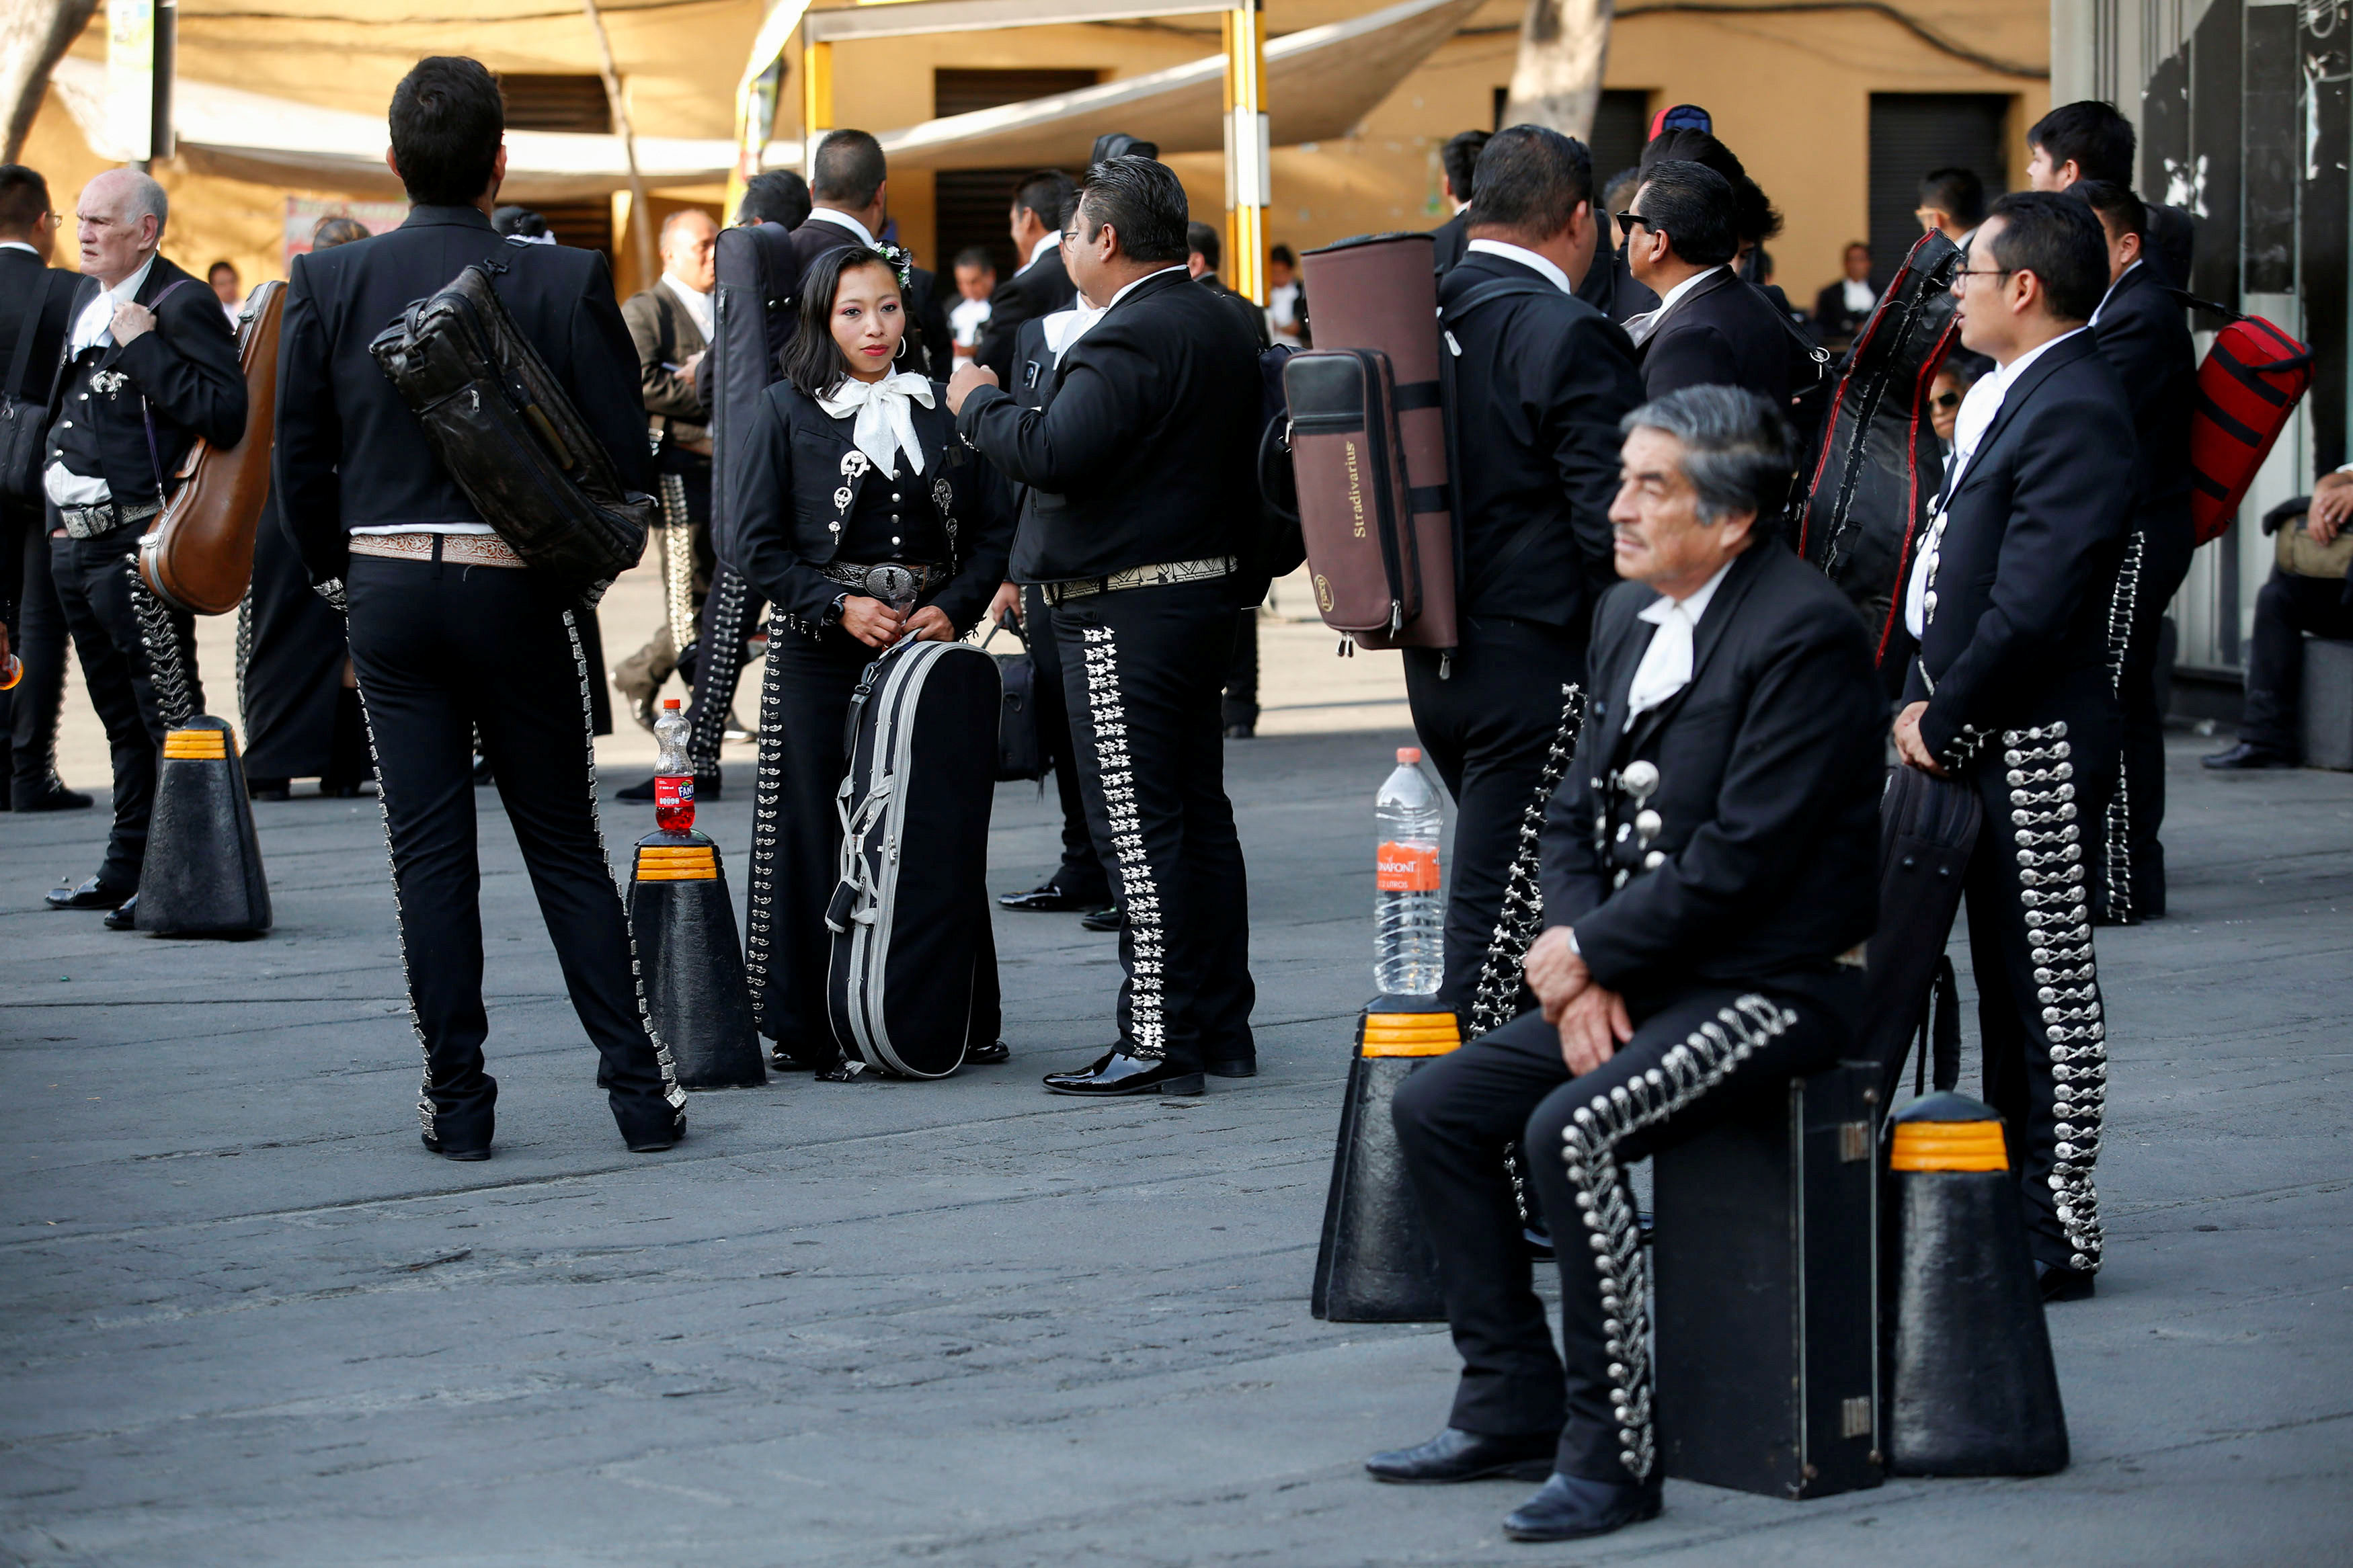 موسيقيون مارياشي يُشاهدون في ساحة بلازا جاريبالدي السياحيةفي مكسيكو سيتي بالمكسيك  (2)